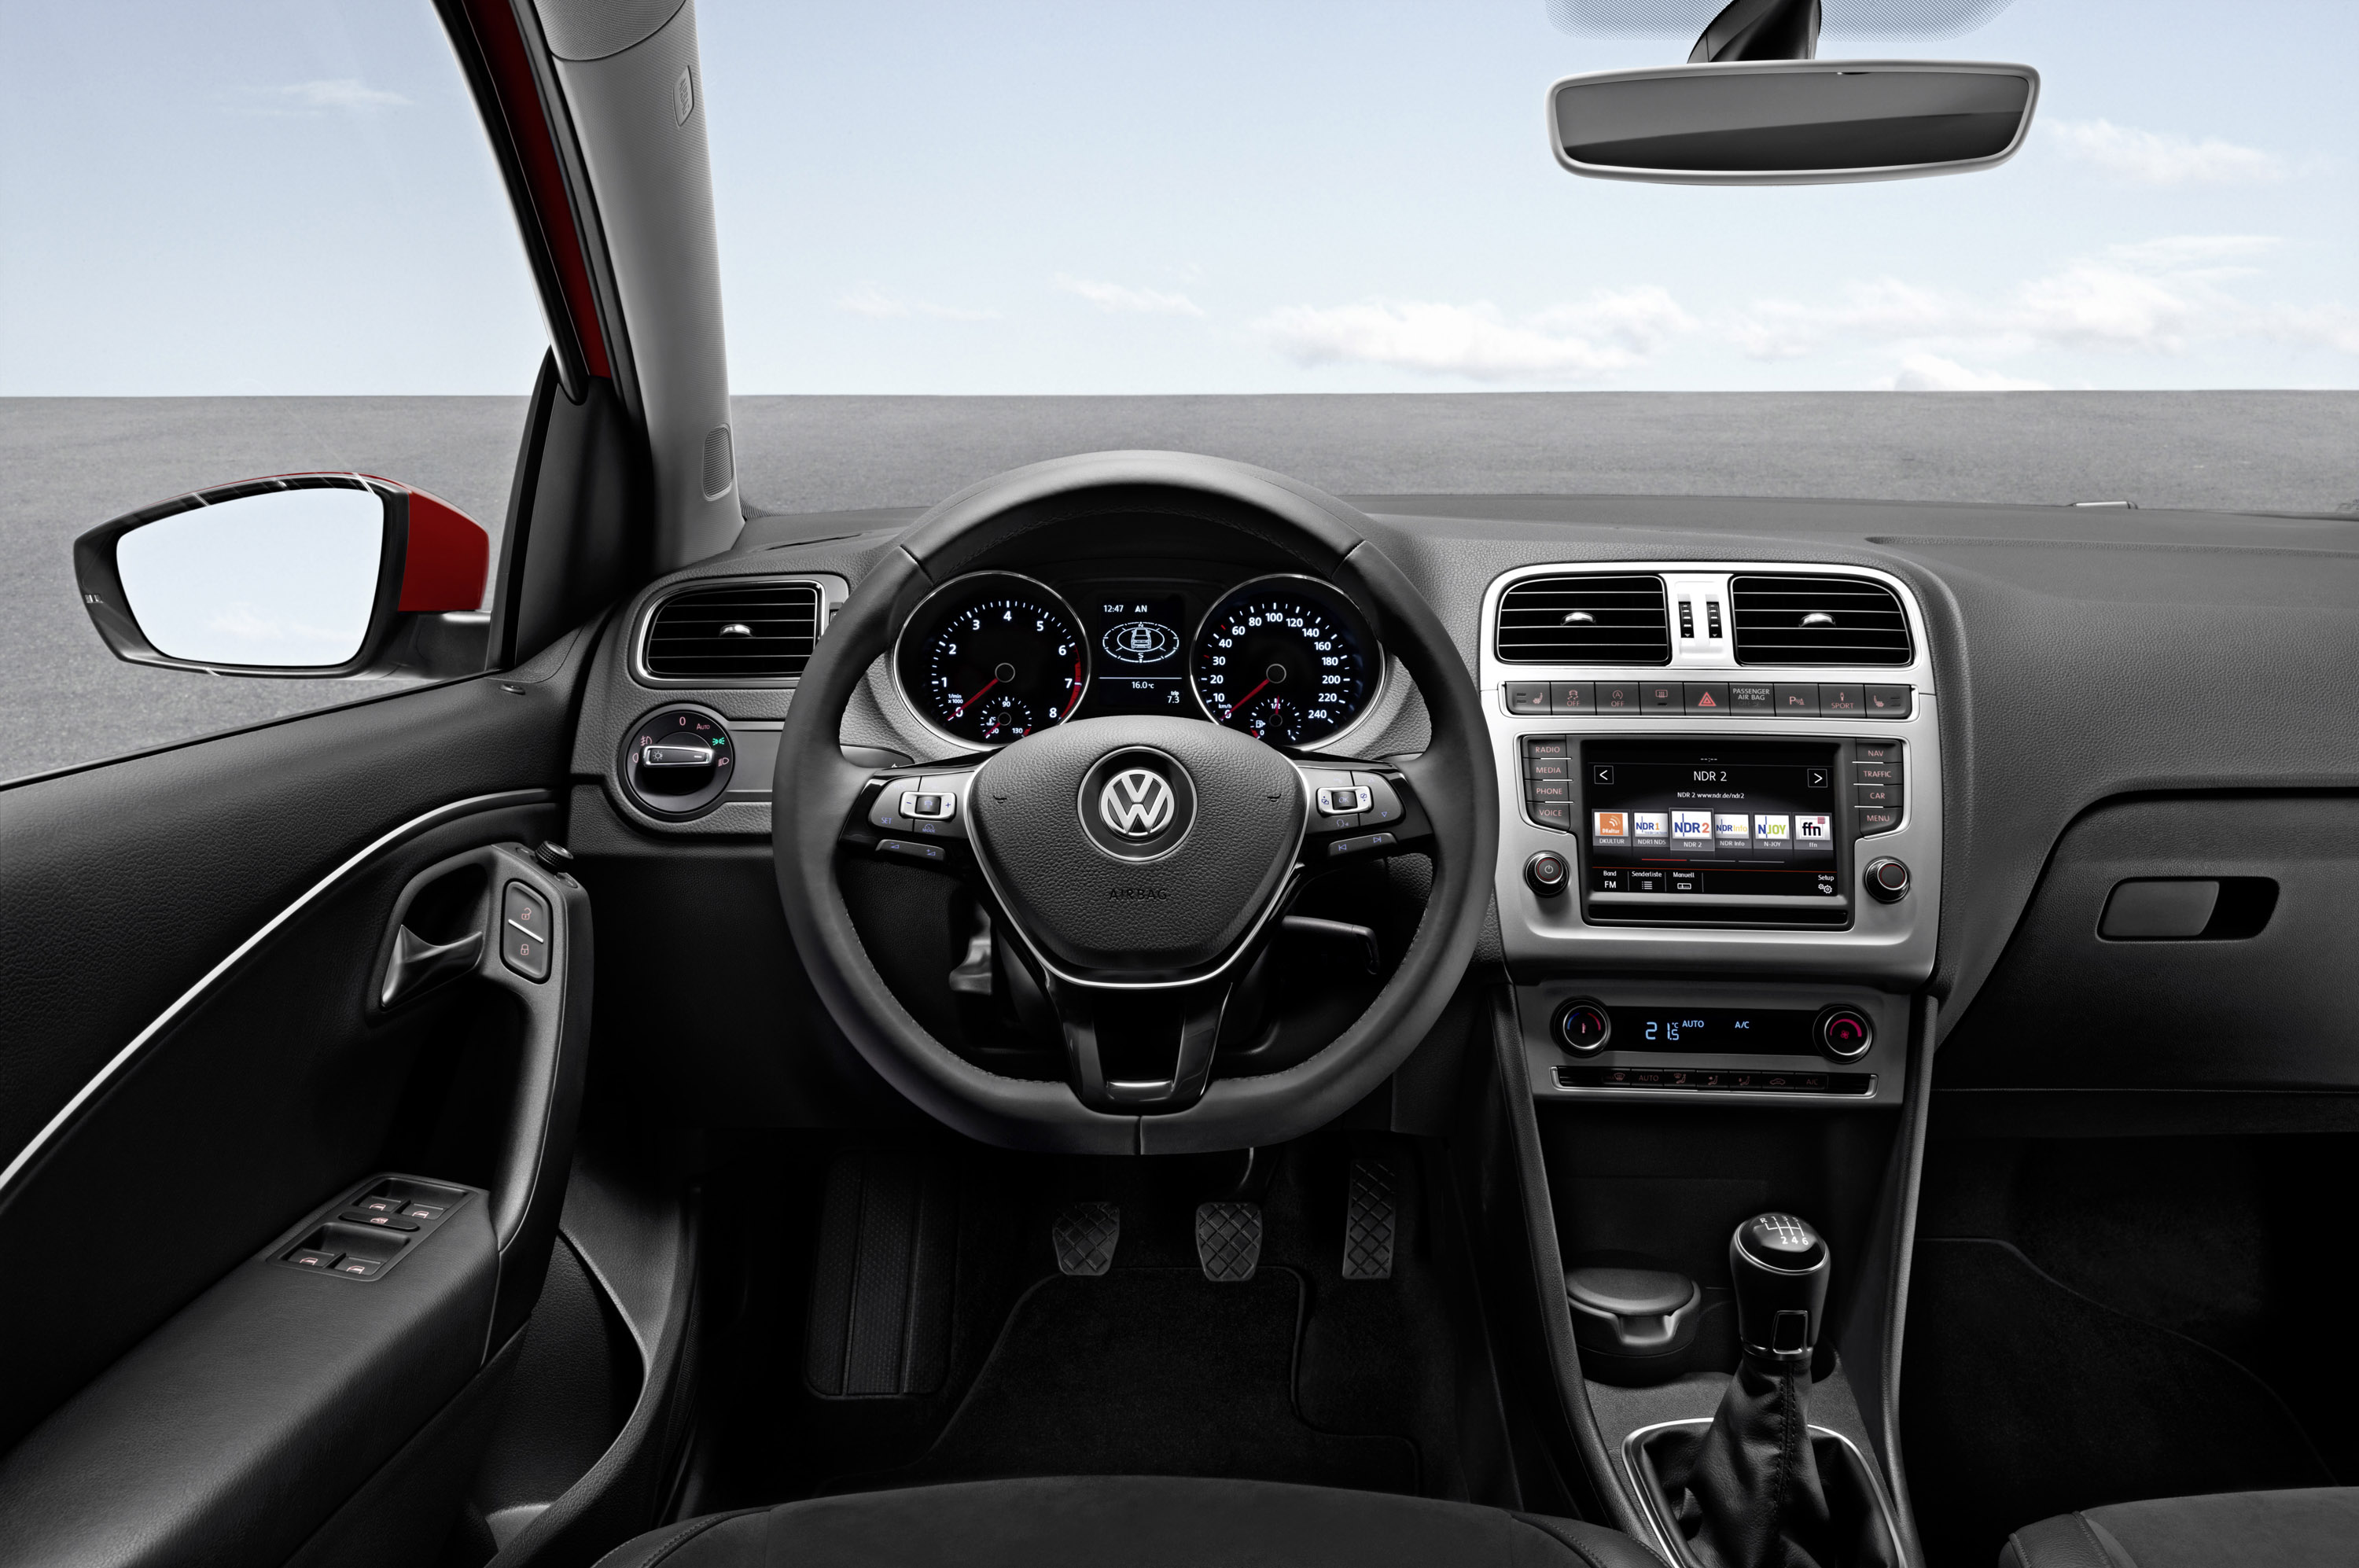 Торпеда 2014. Volkswagen Polo sedan 2017 салон. Фольксваген поло седан 2014 салон. Volkswagen Polo 2014 торпеда. Volkswagen Polo 2014 салон.